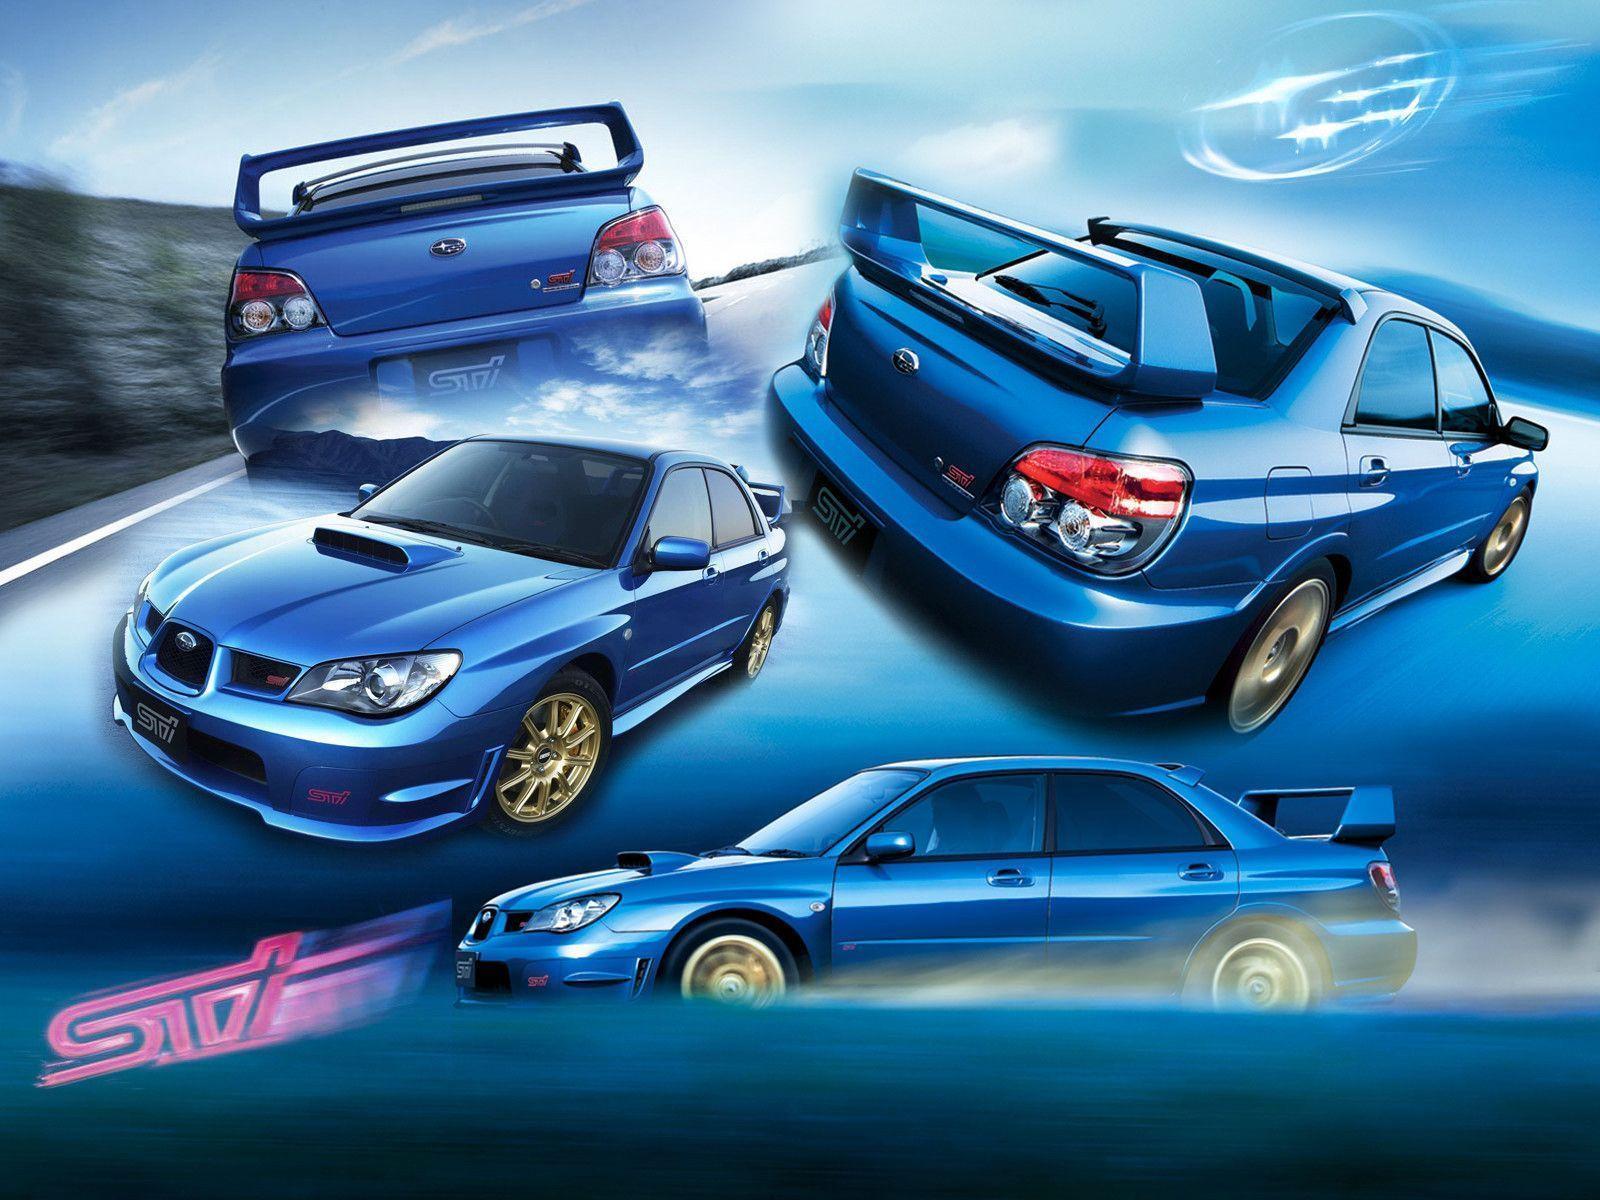 Subaru Impreza STi Image & Wallpaper on Jeweell